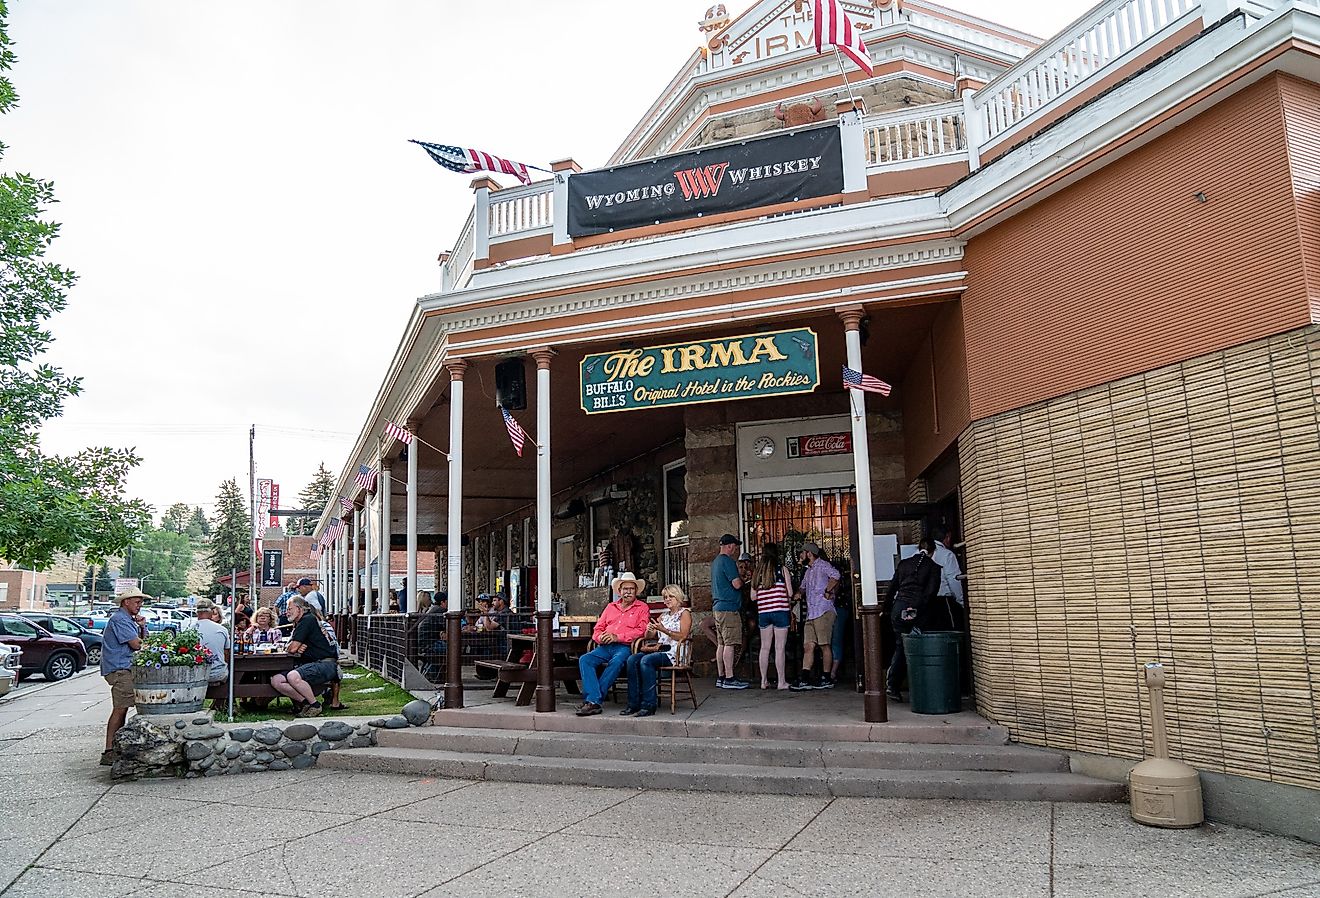 Irma Restaurant, Cody, Wyoming. Image credit melissamn via Shutterstock